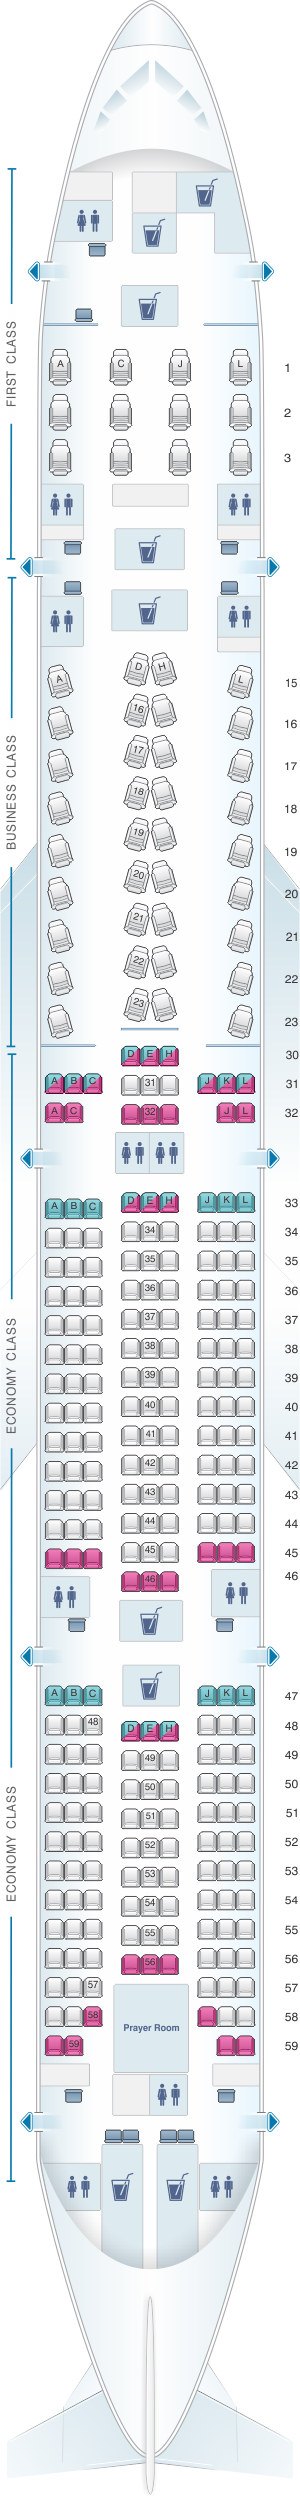 Seat map for Saudi Arabian Airlines Boeing B777 300ER (Z)